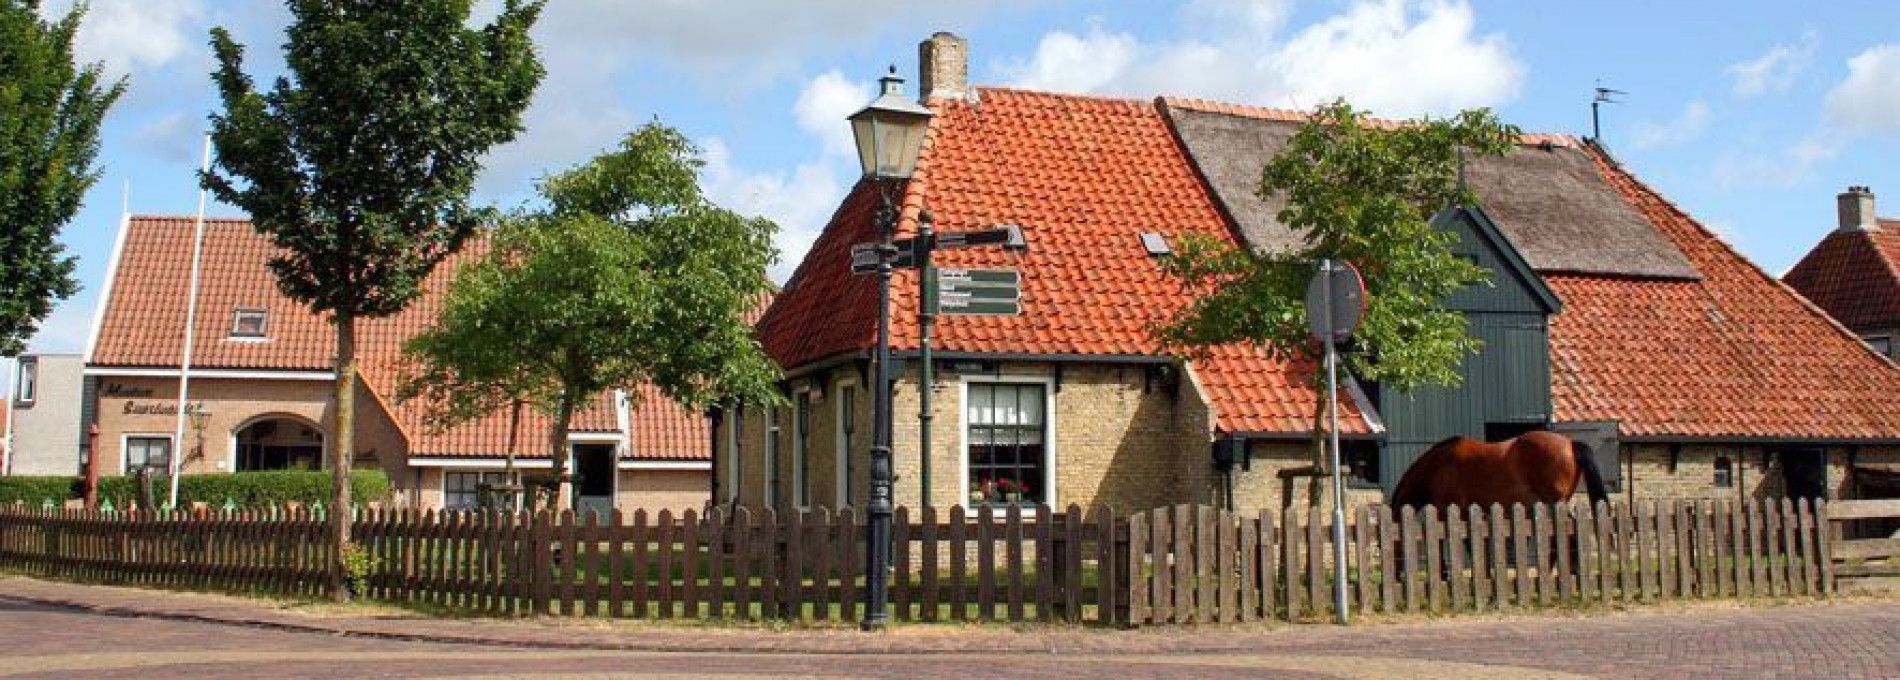 Landbouw-Juttersmuseum Swartwoude - VVV Ameland